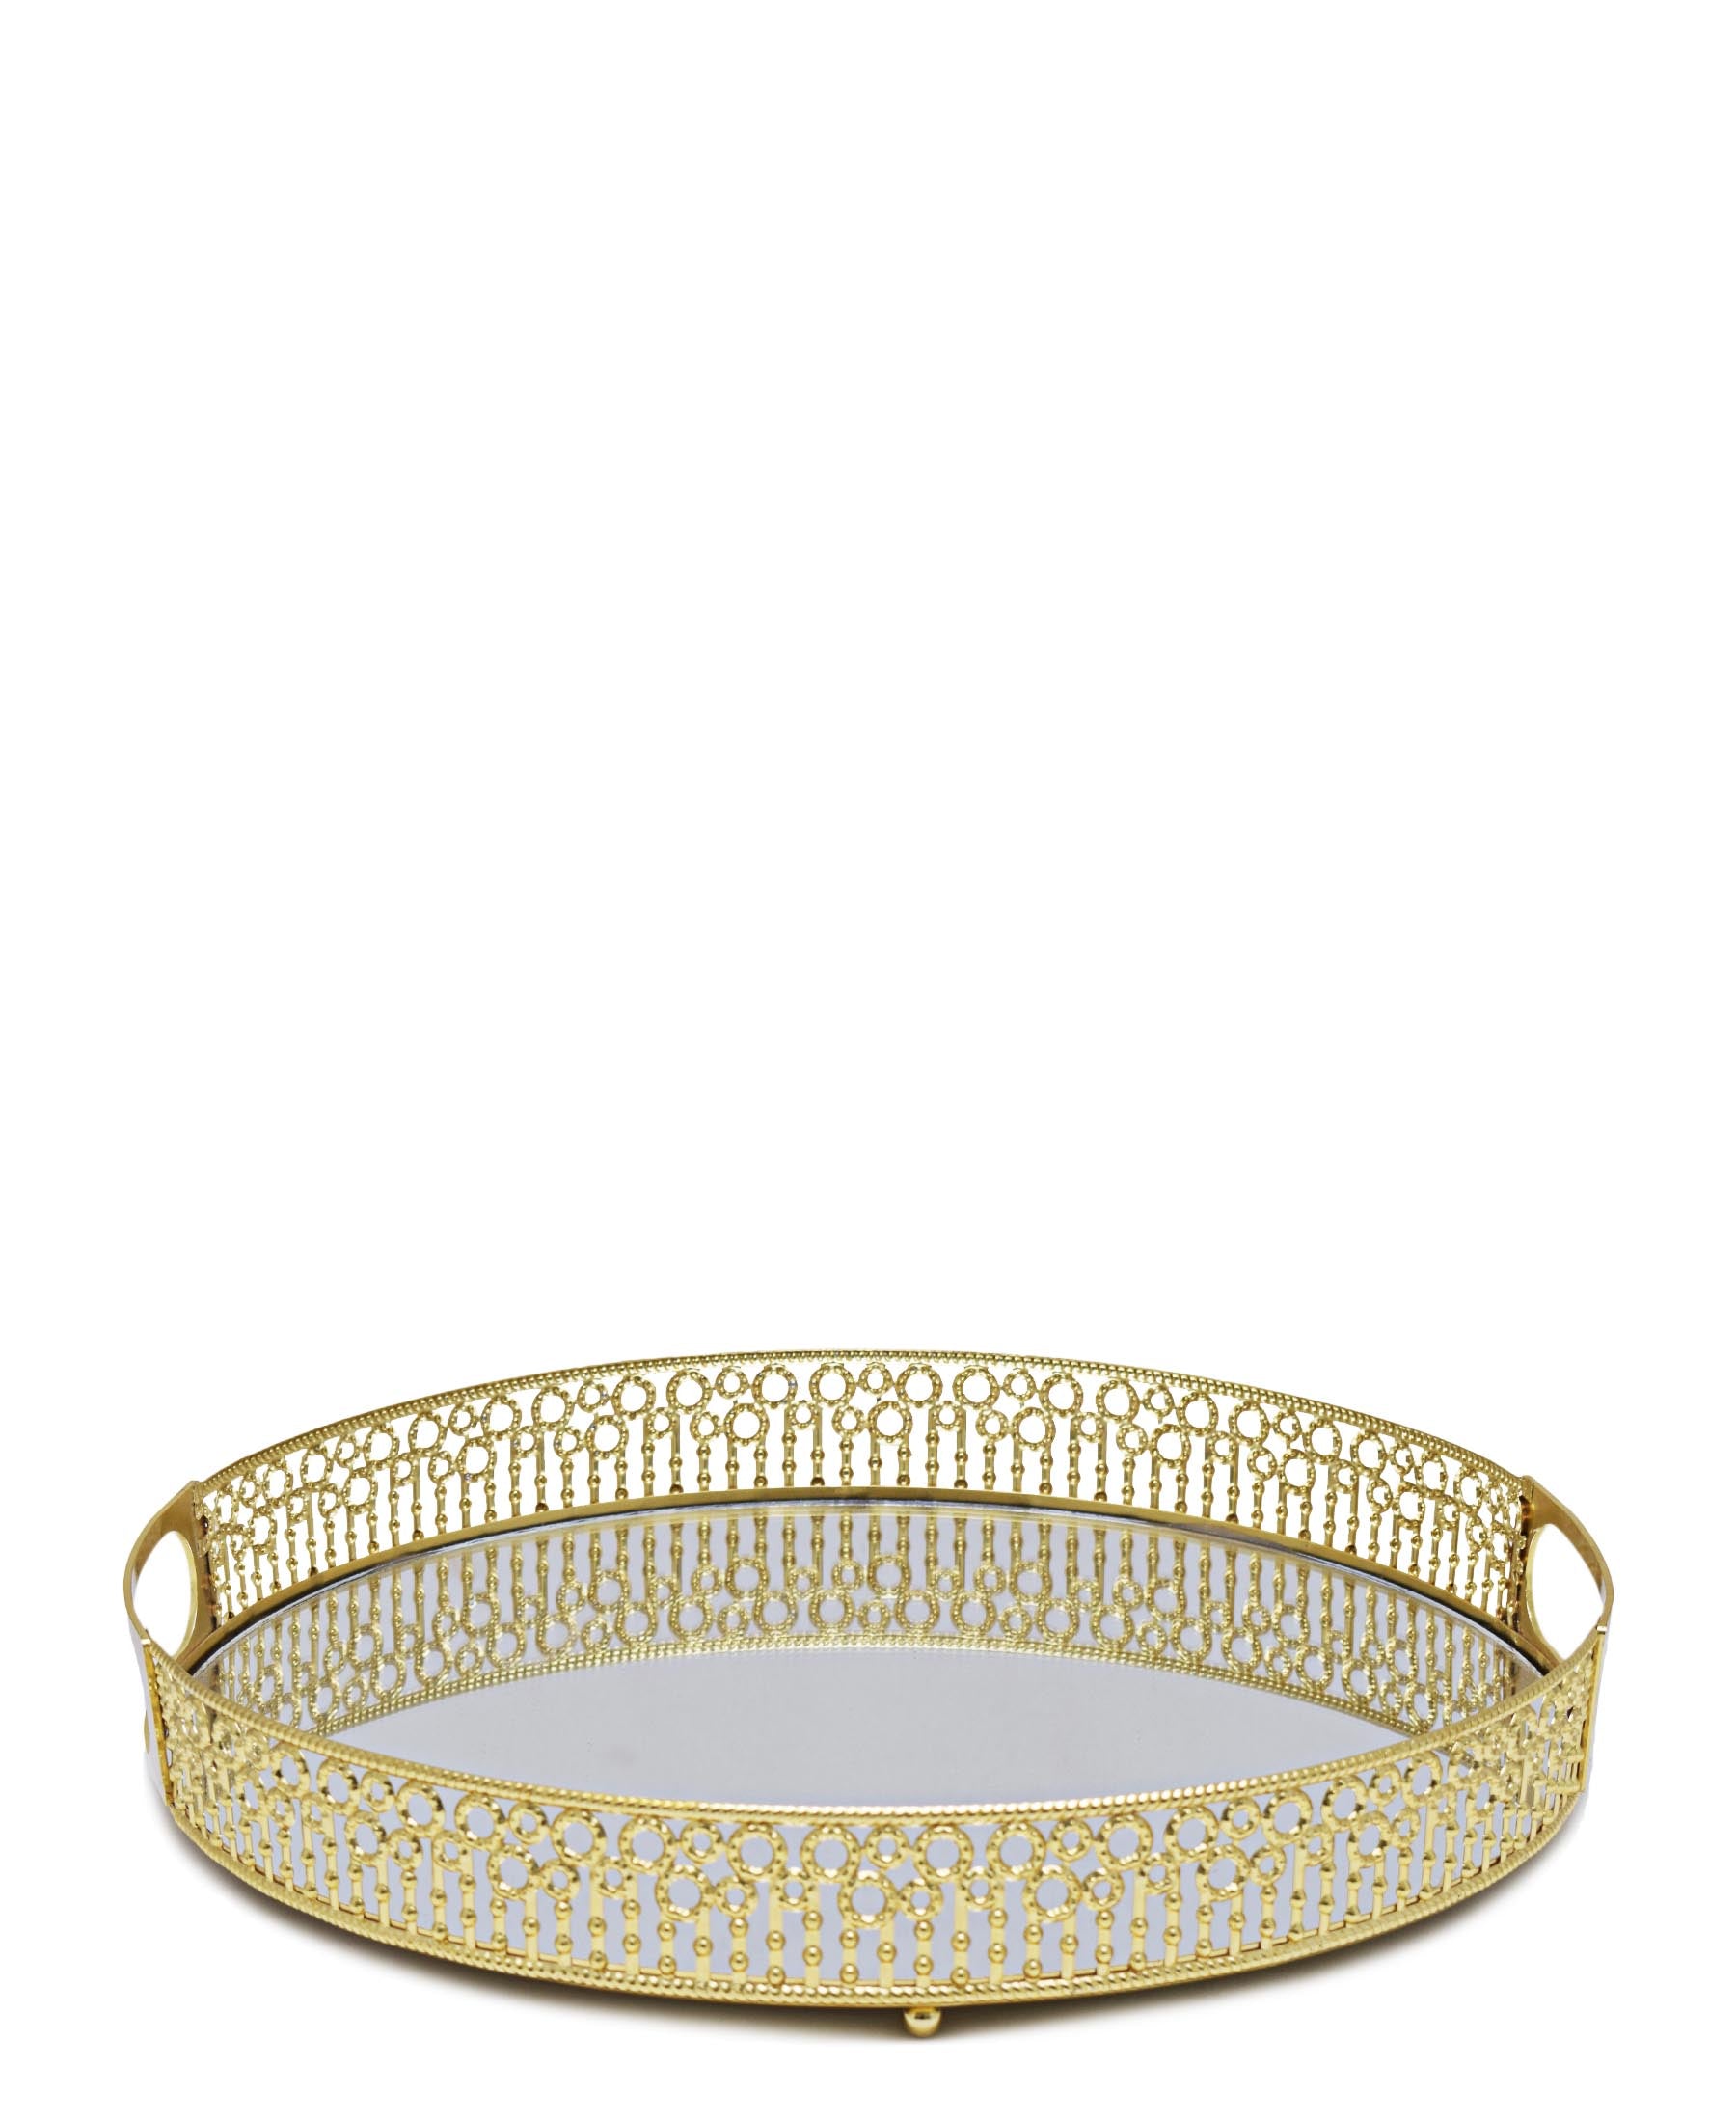 Bursa Collection Designer Tray With Handles - Gold